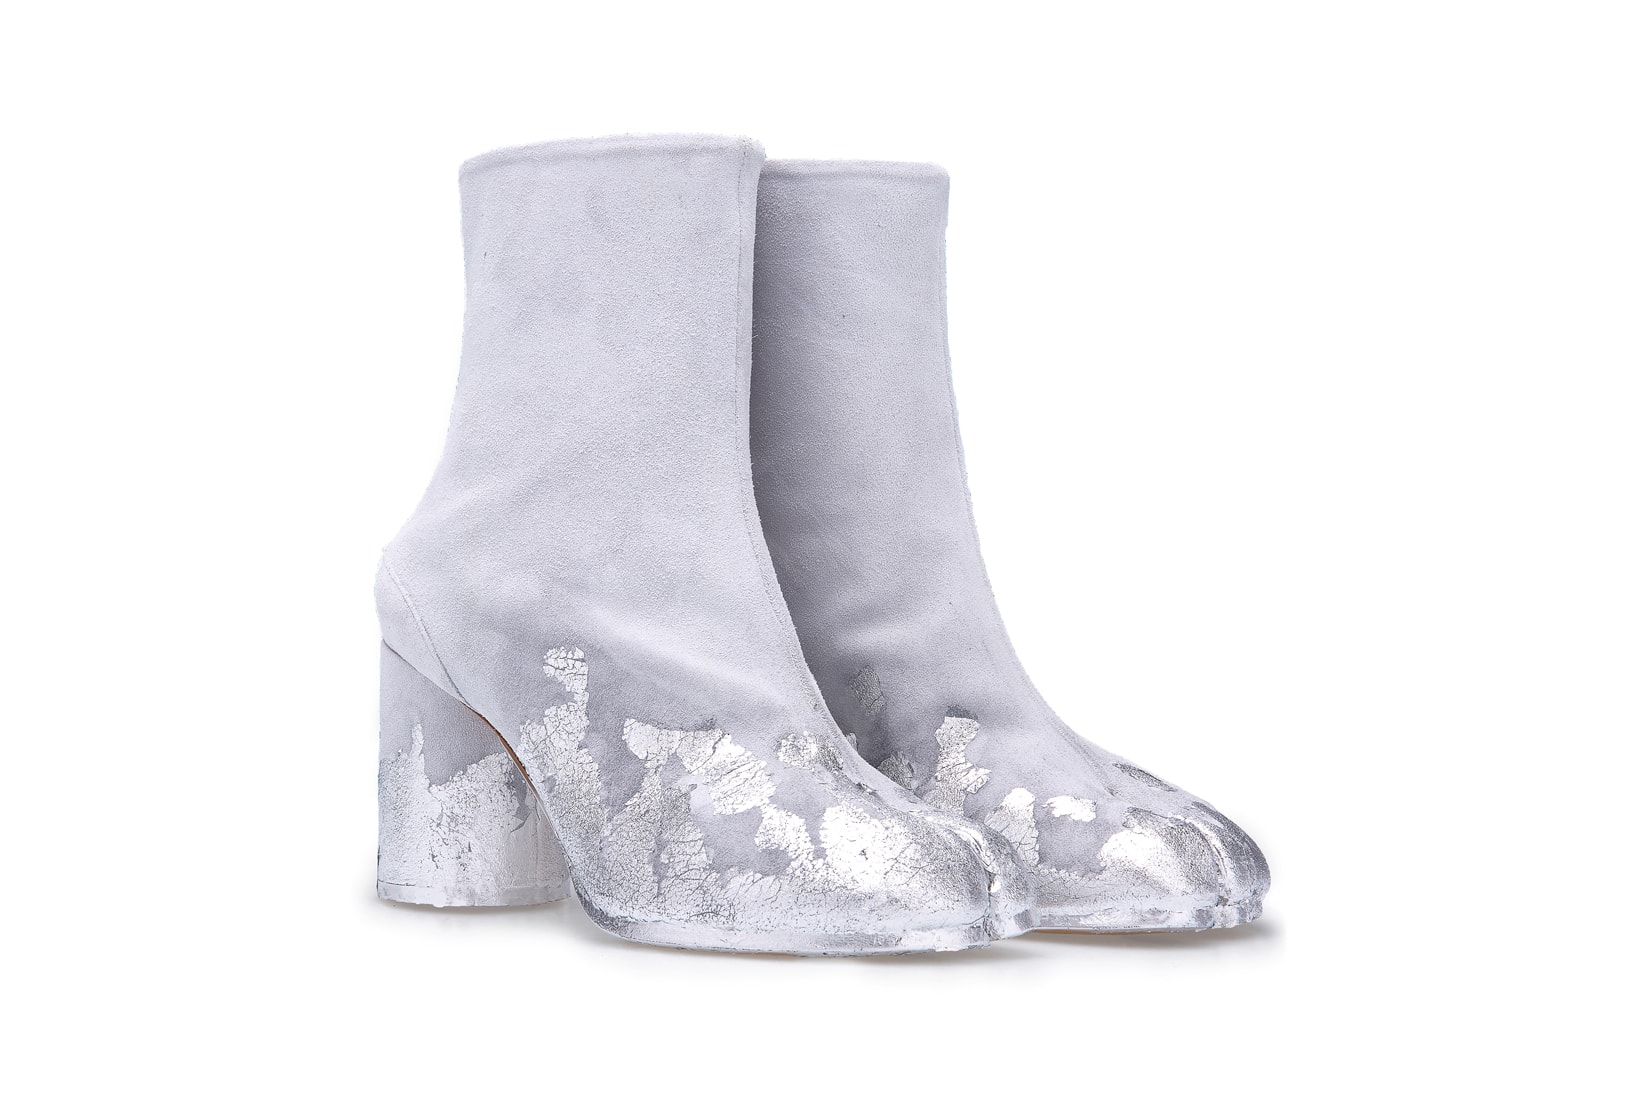 Maison Margiela x Dover Street Market Tabi Ankle Boot Grey Silver